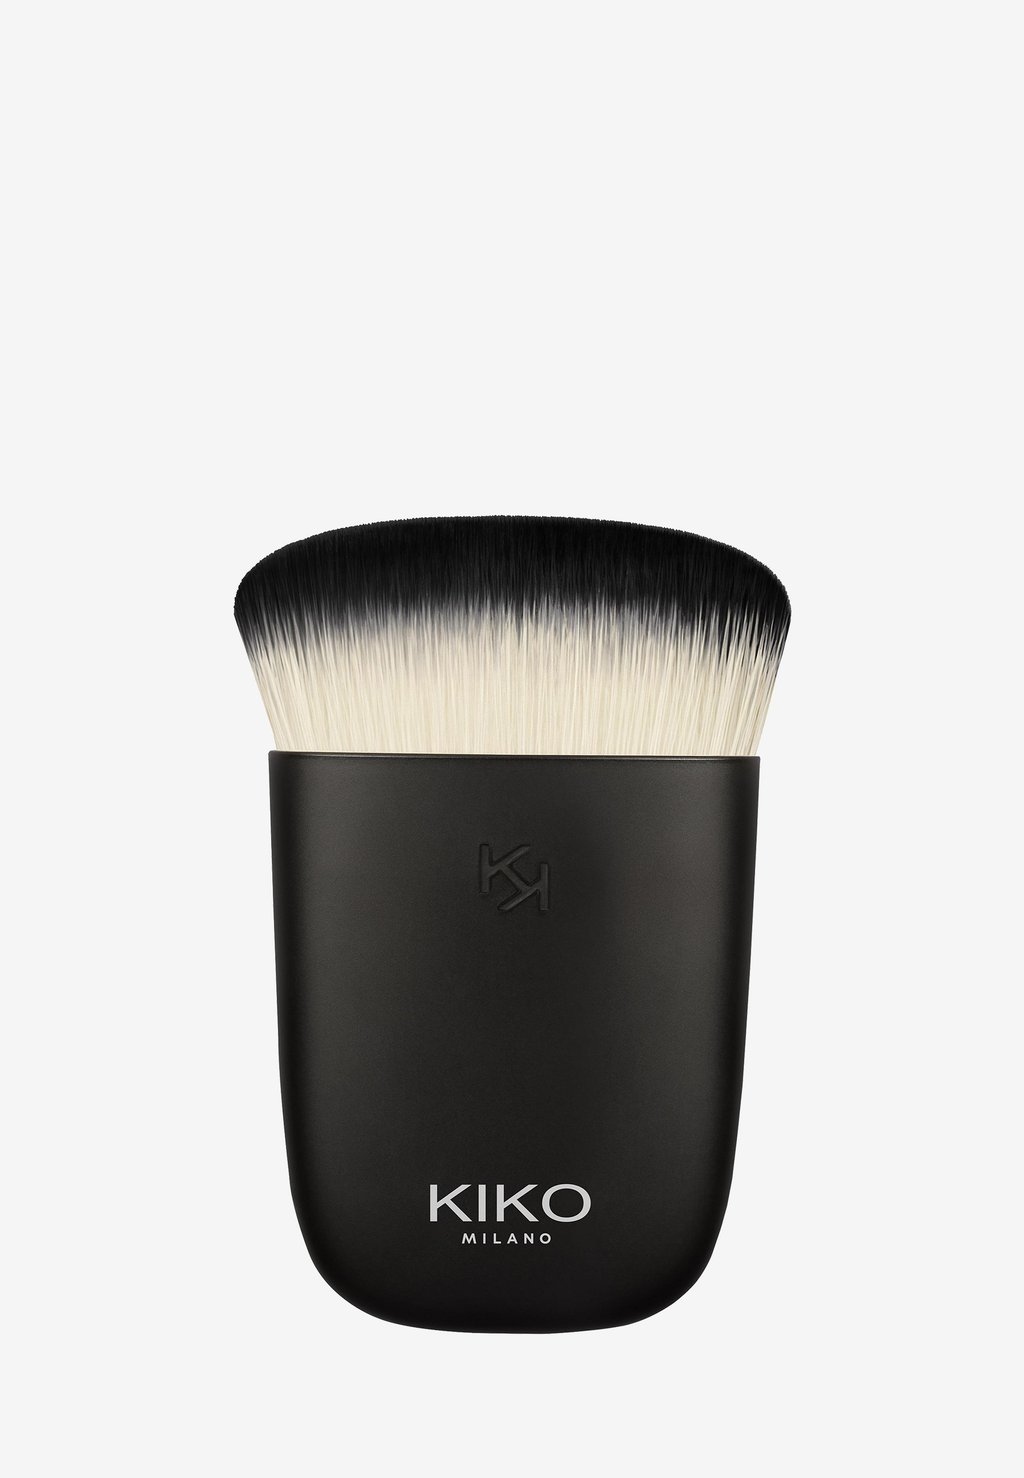 кисти для макияжа face 16 multi purpose kabuki brush kiko milano Кисти для макияжа Face 16 Multi-Purpose Kabuki Brush KIKO Milano